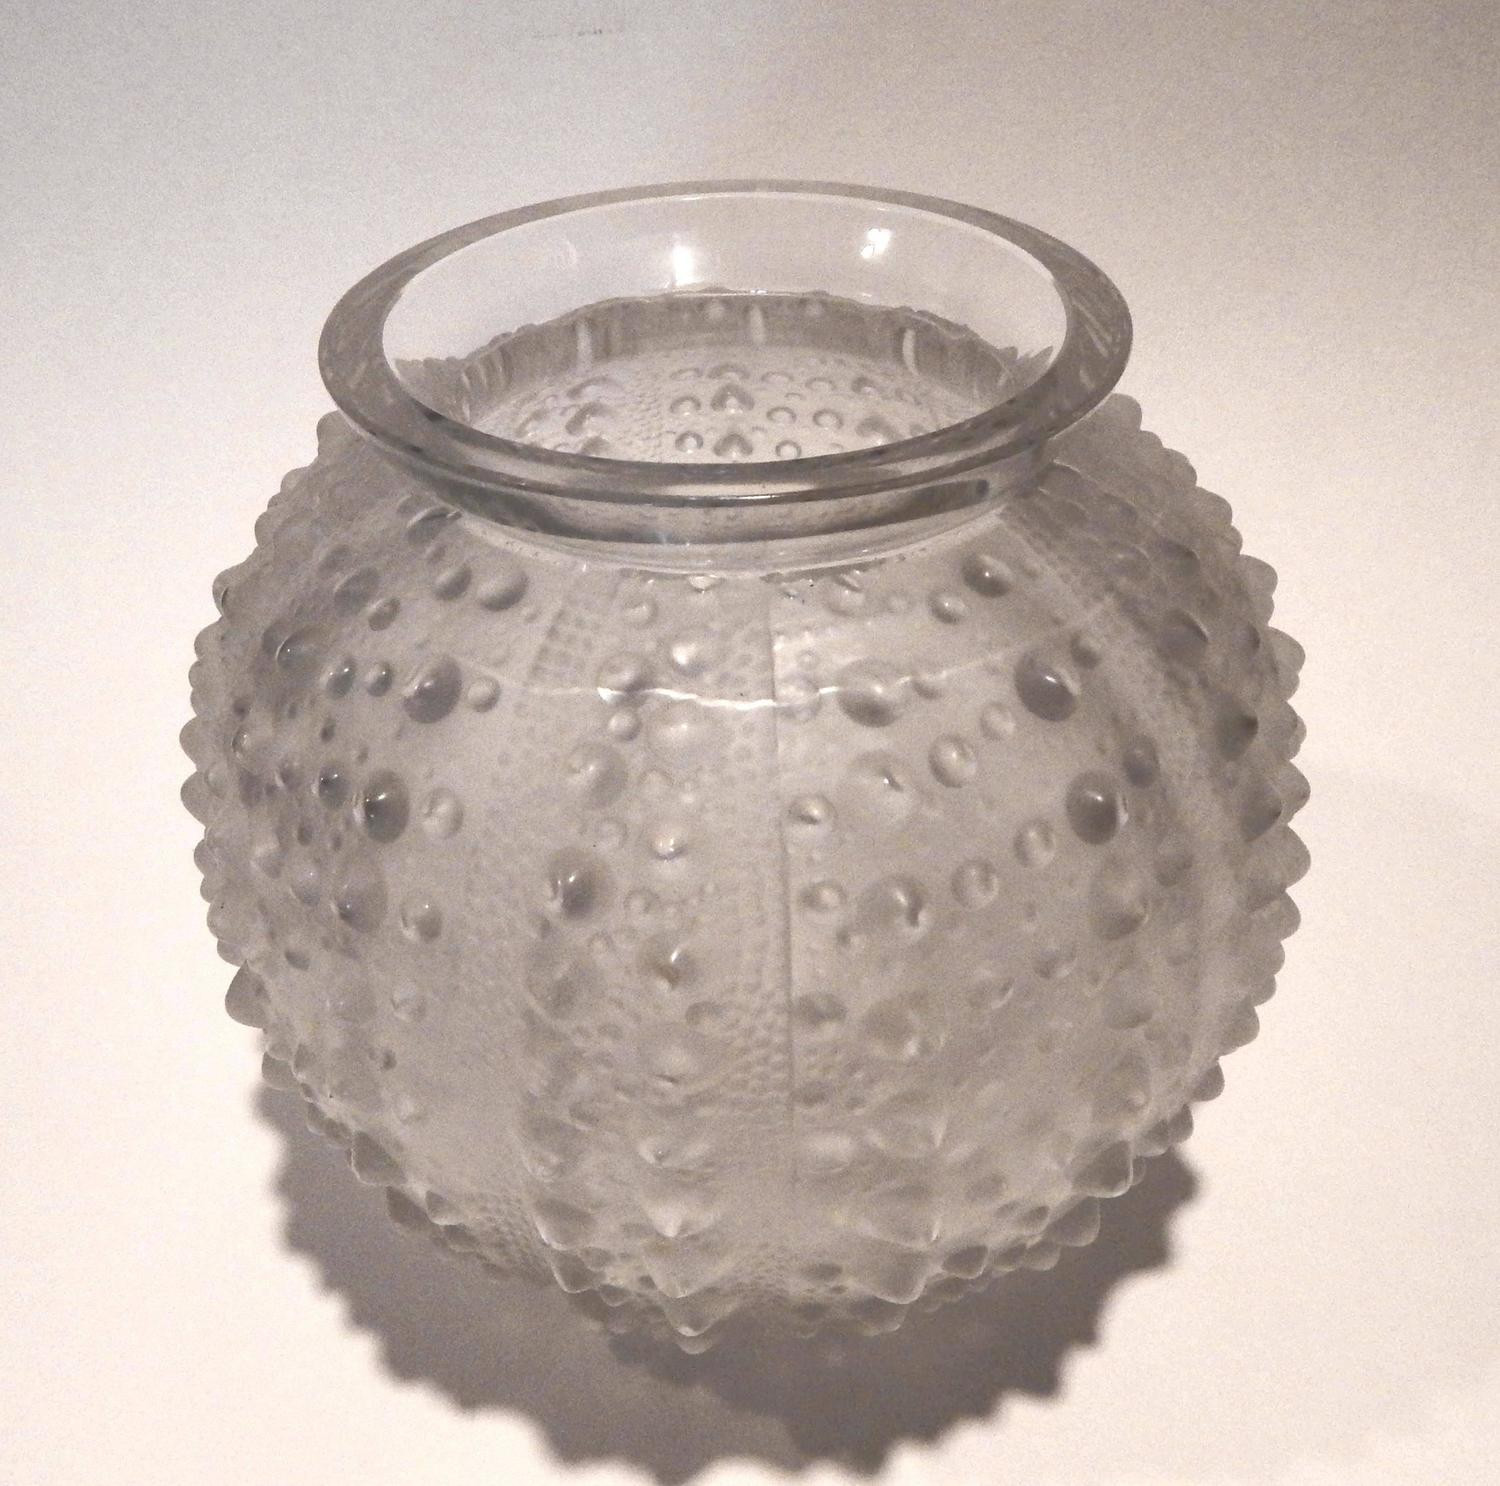 27 Wonderful Glass Sea Urchin Vase 2024 free download glass sea urchin vase of r lalique oursin or sea urchin vase circa 1935 for sale at 1stdibs pertaining to dscn8647 z jpg